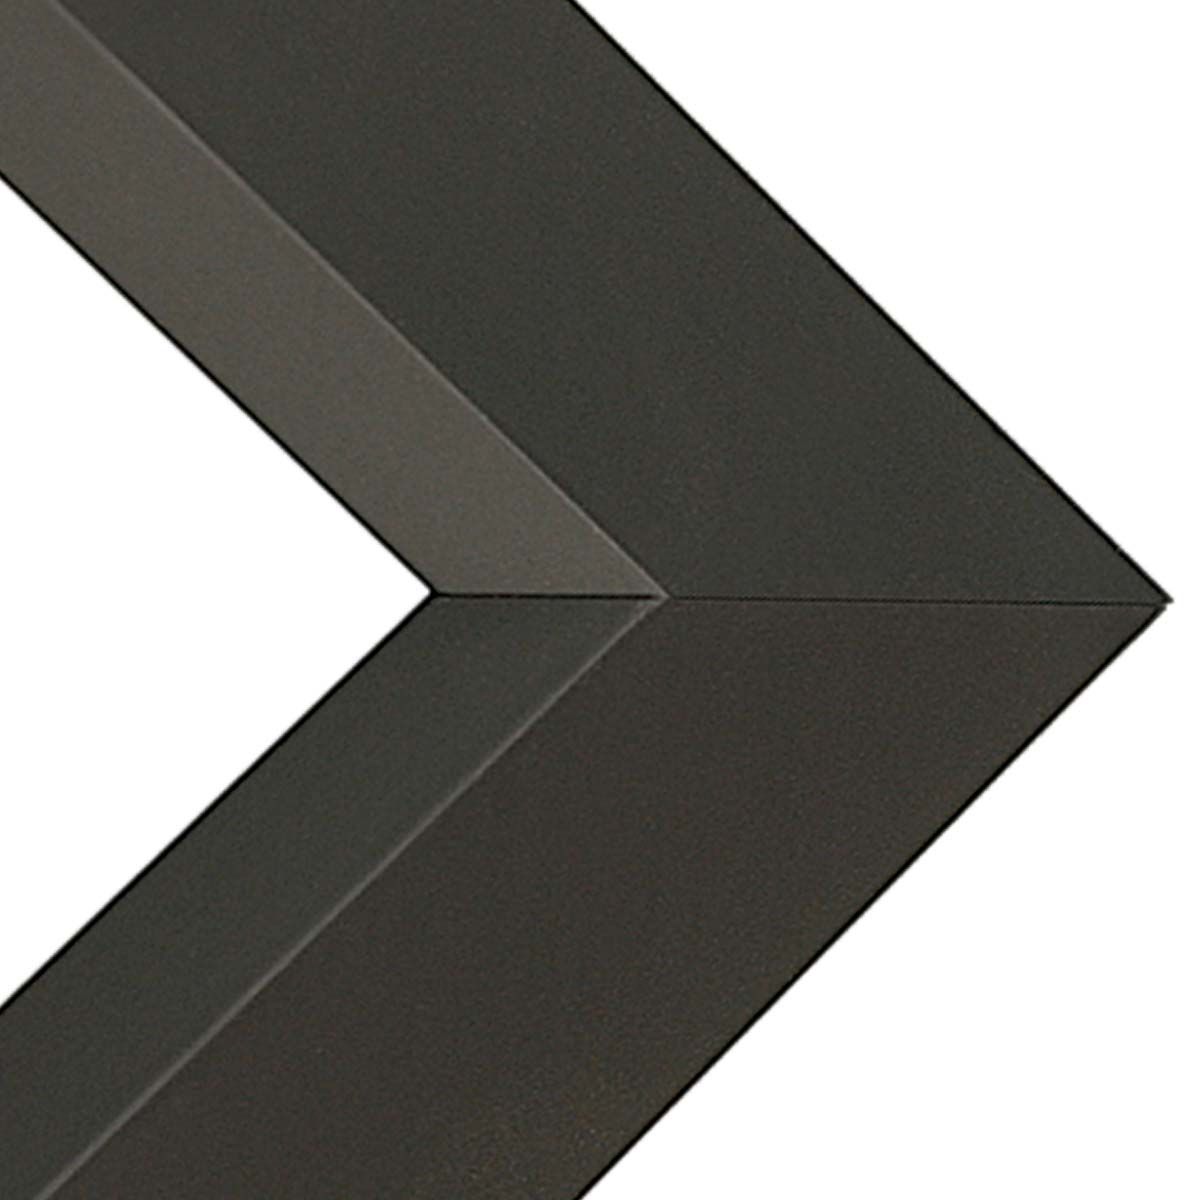 Columbia 1.75"Wood Frame with acrylic glazing and cardboard backing 22x28" - Black